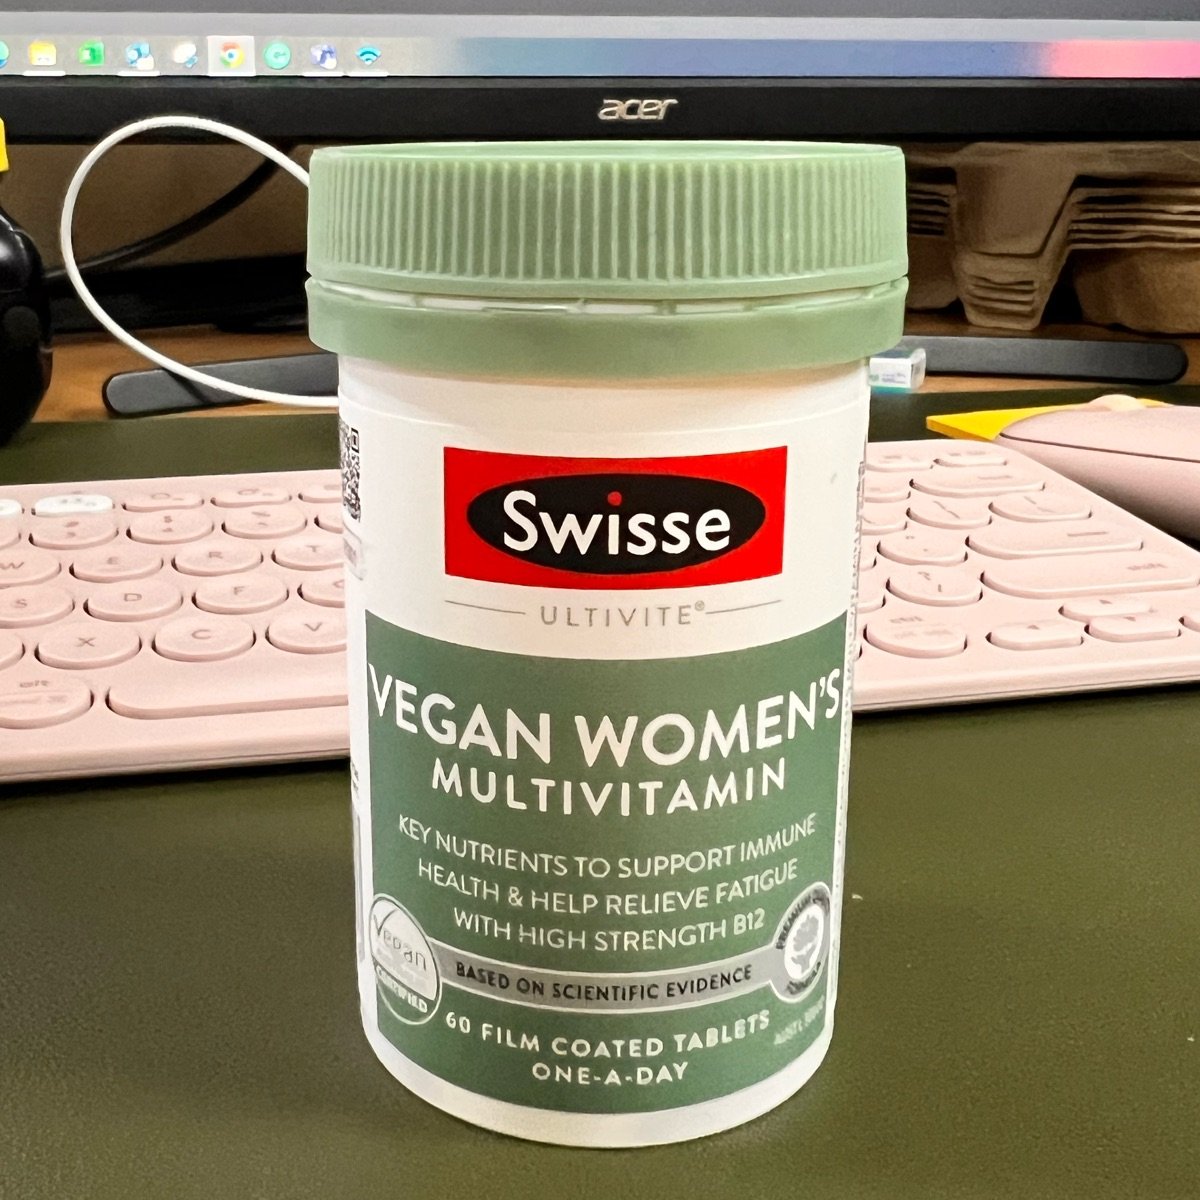 Swisse Vegan Women's Multivitamin Review | abillion